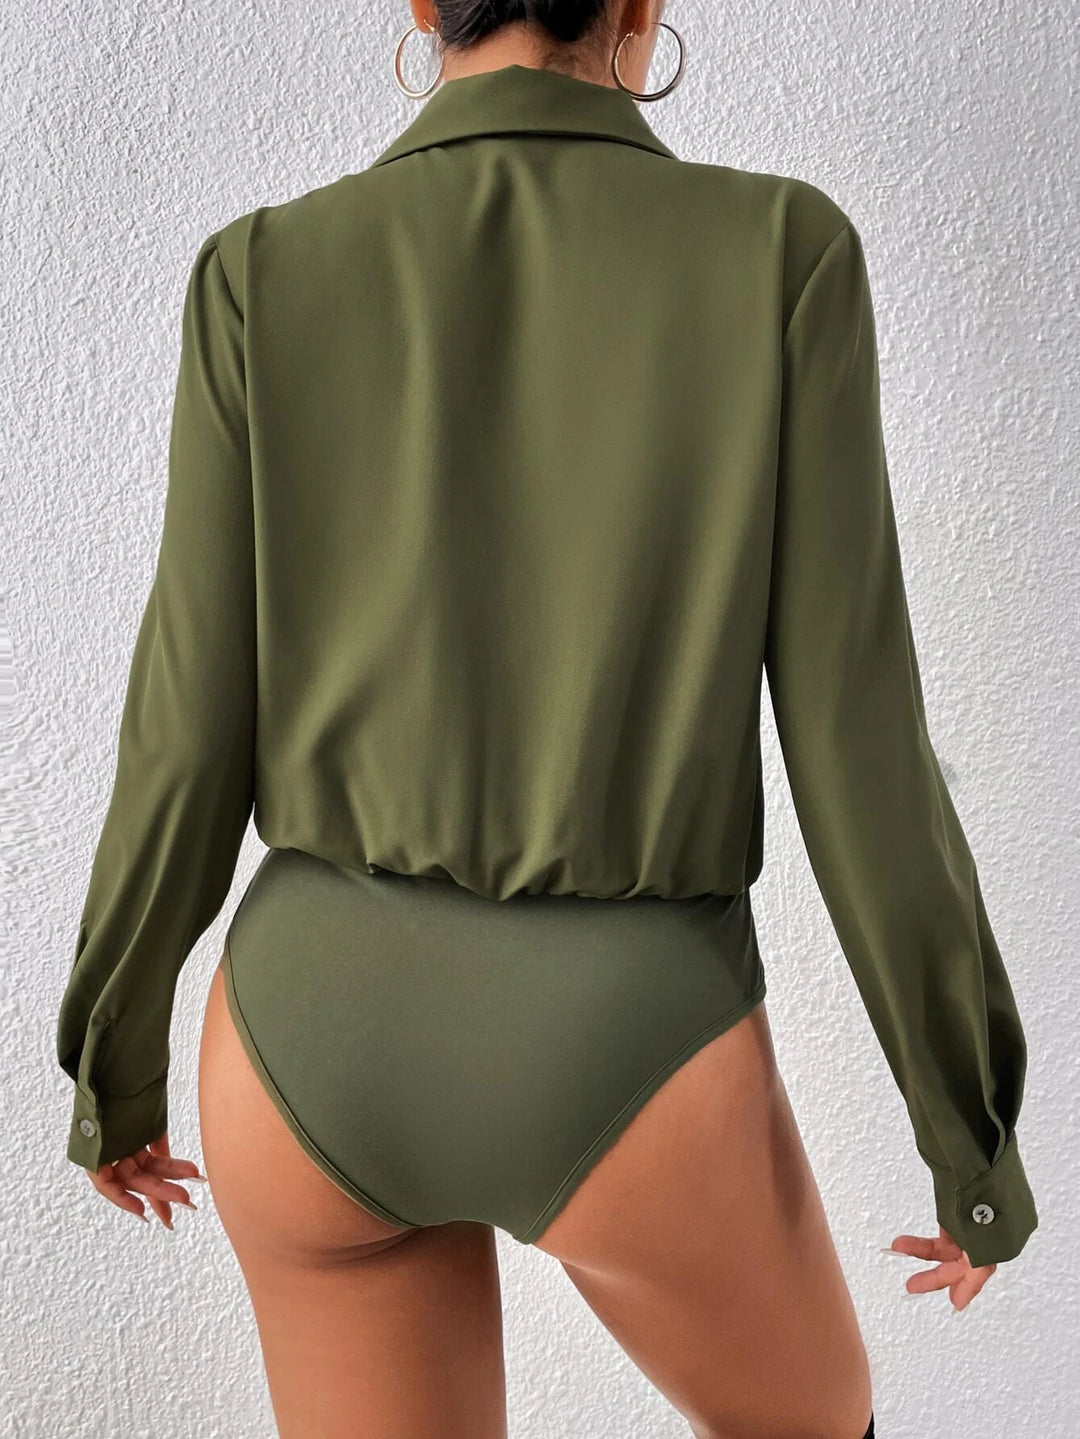 Lapel Neckline Shirt Style Bodysuit